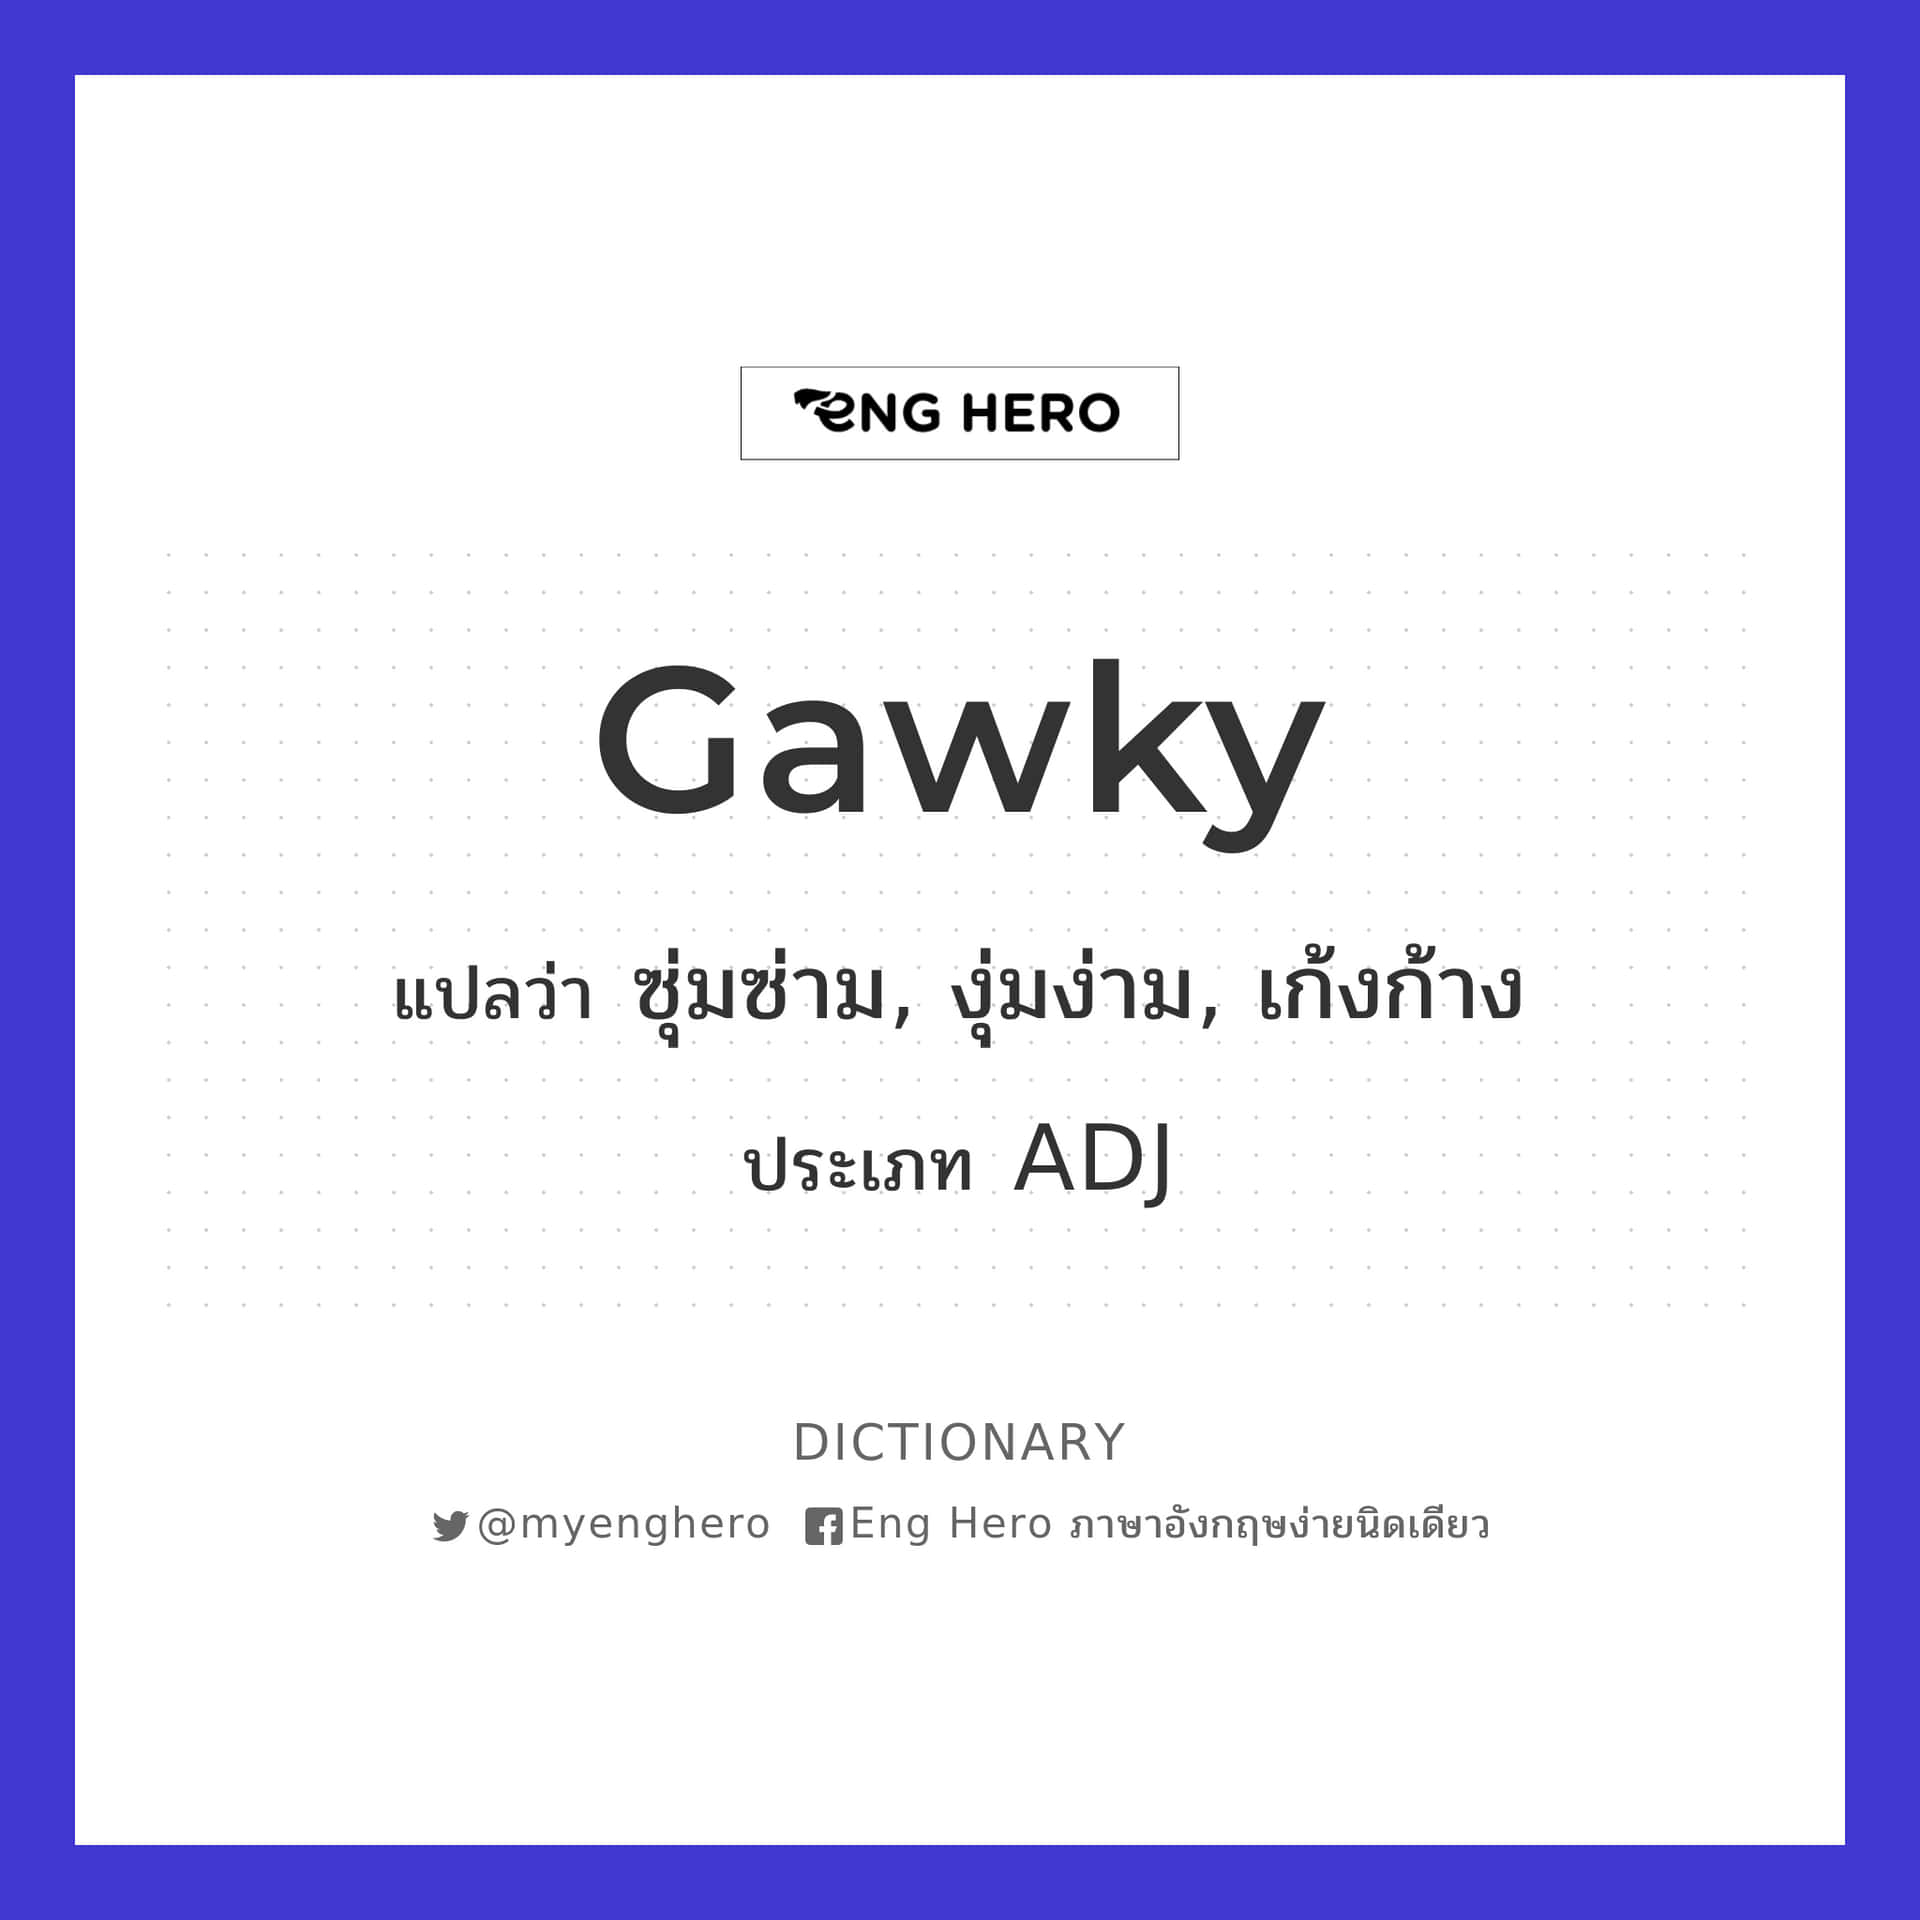 Gawkydefinition På Thailändska Would Be 